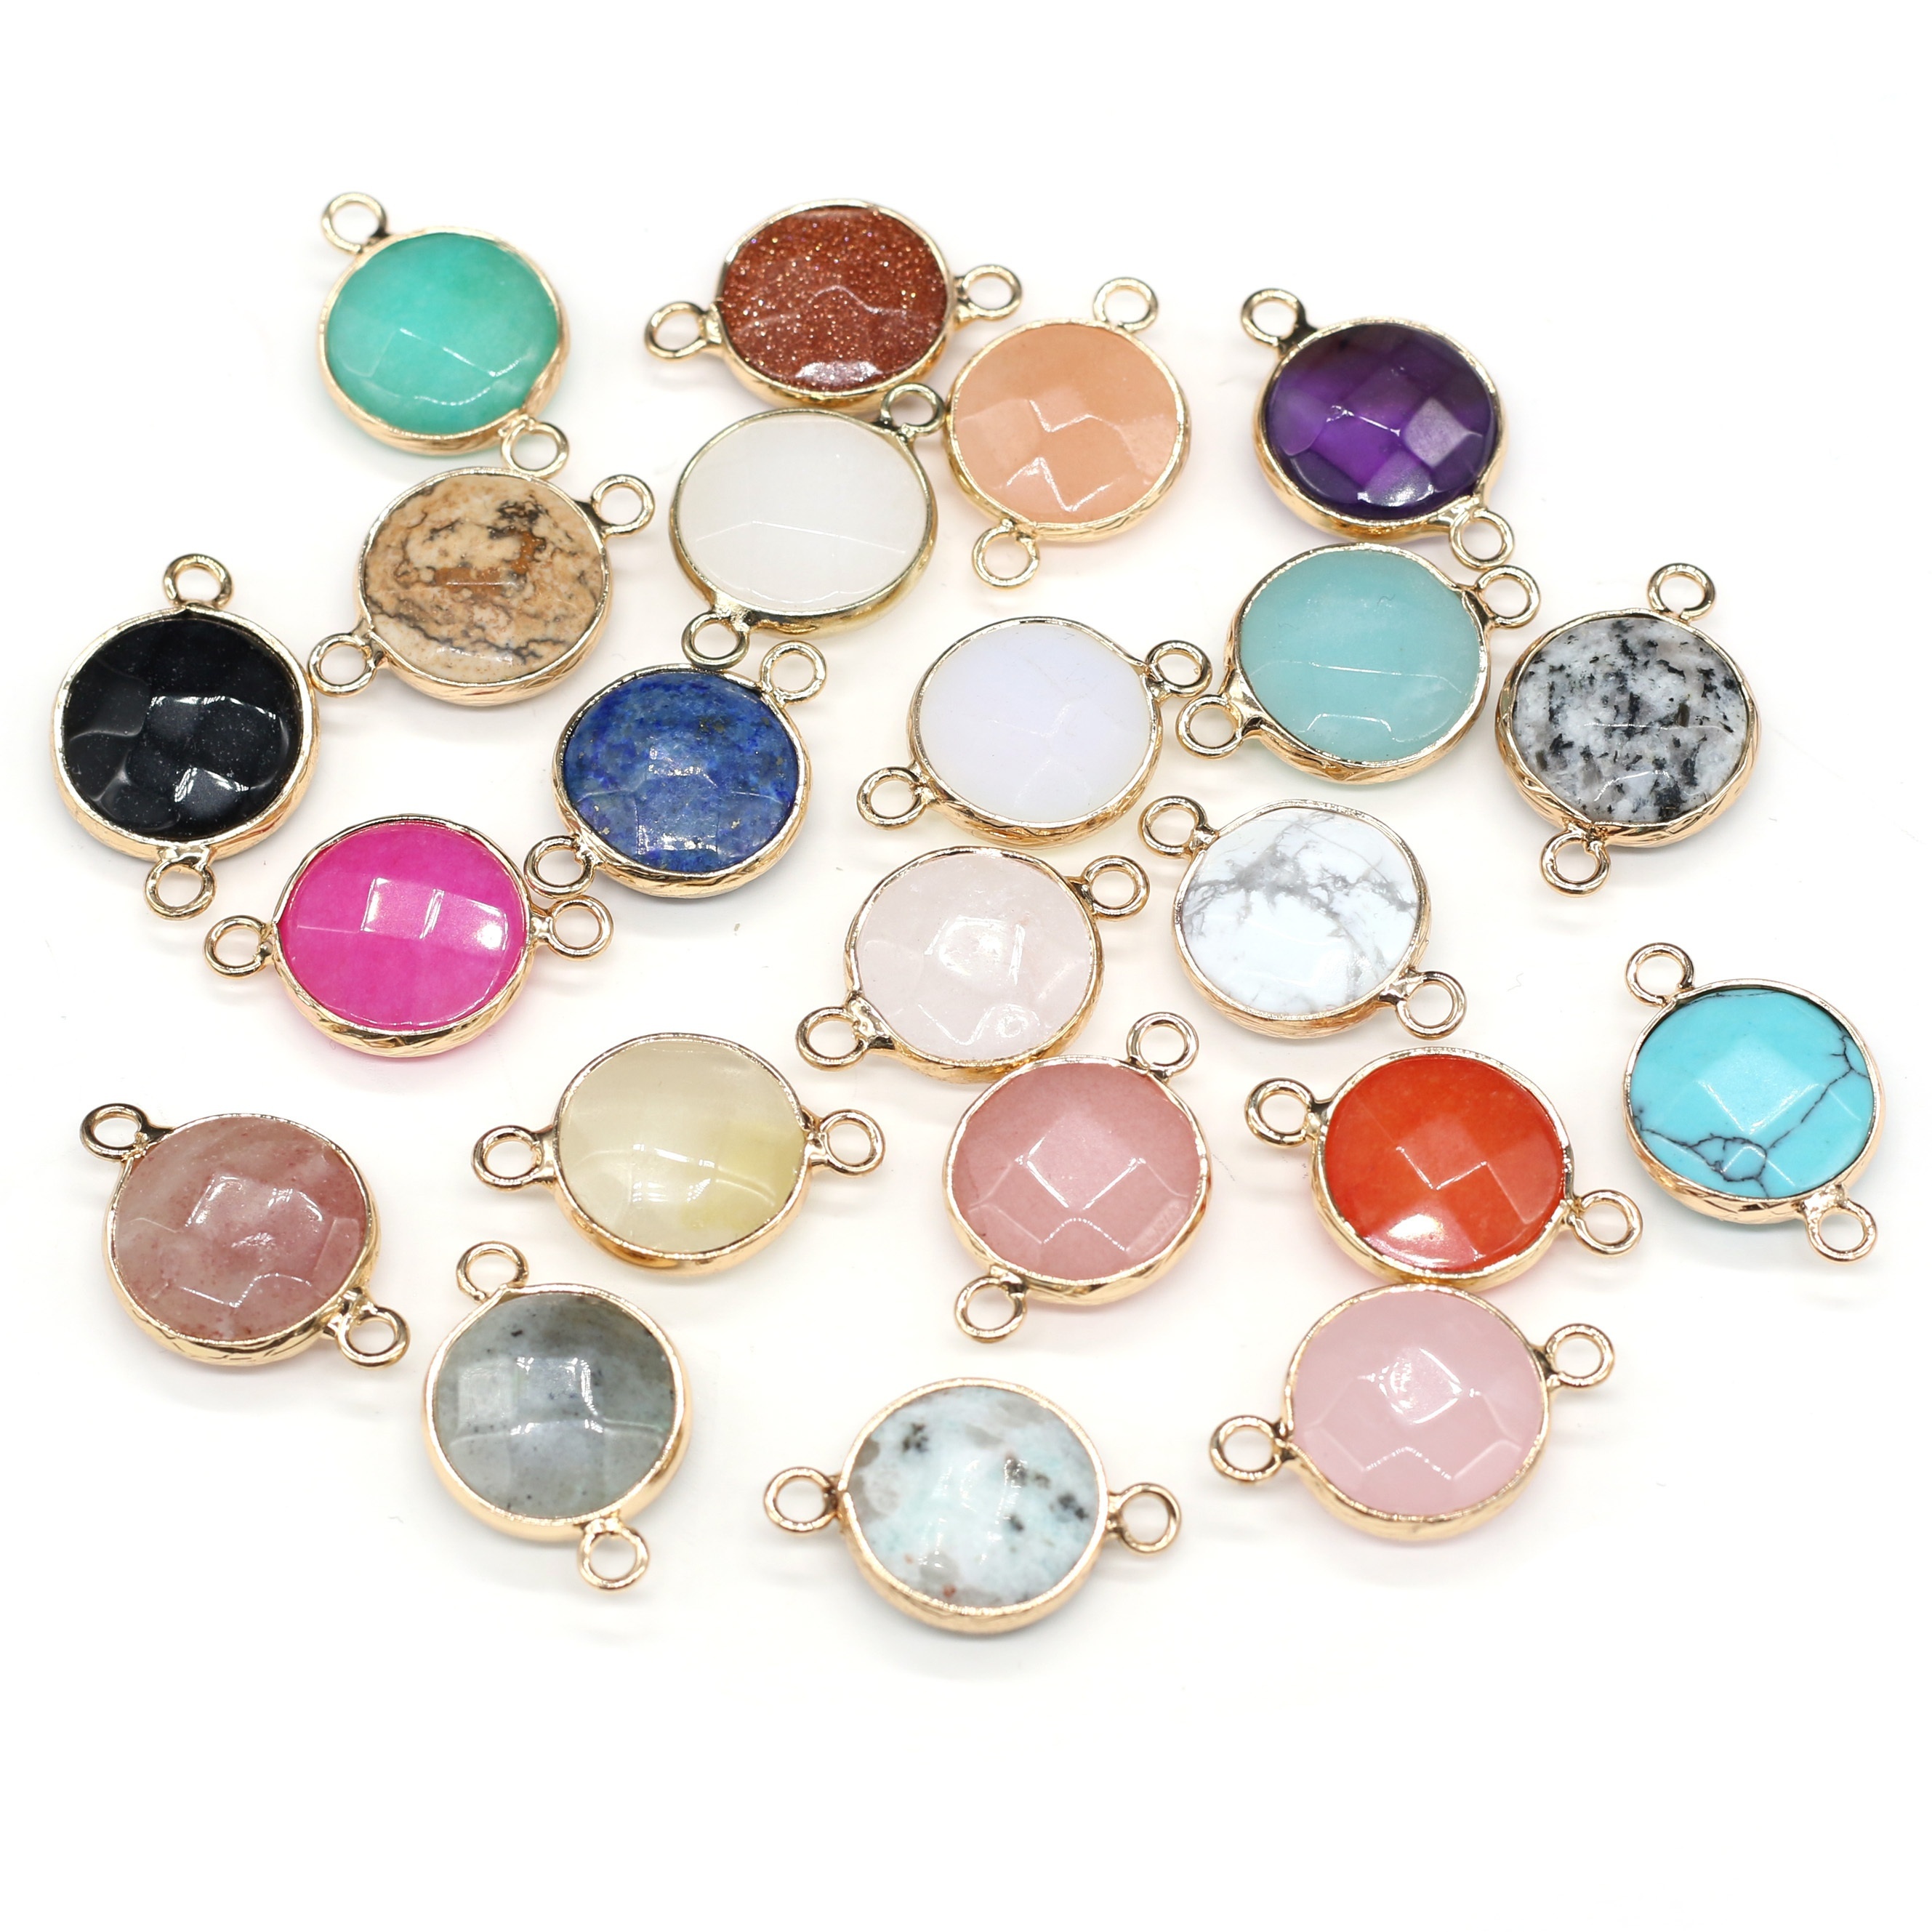 

5pcs Natural Stone Quartz Gemstones Double Hanging Round Charms Link Pendant Connectors For Jewelry Making Diy Bracelets Necklaces Earrings Accessories (random Color)